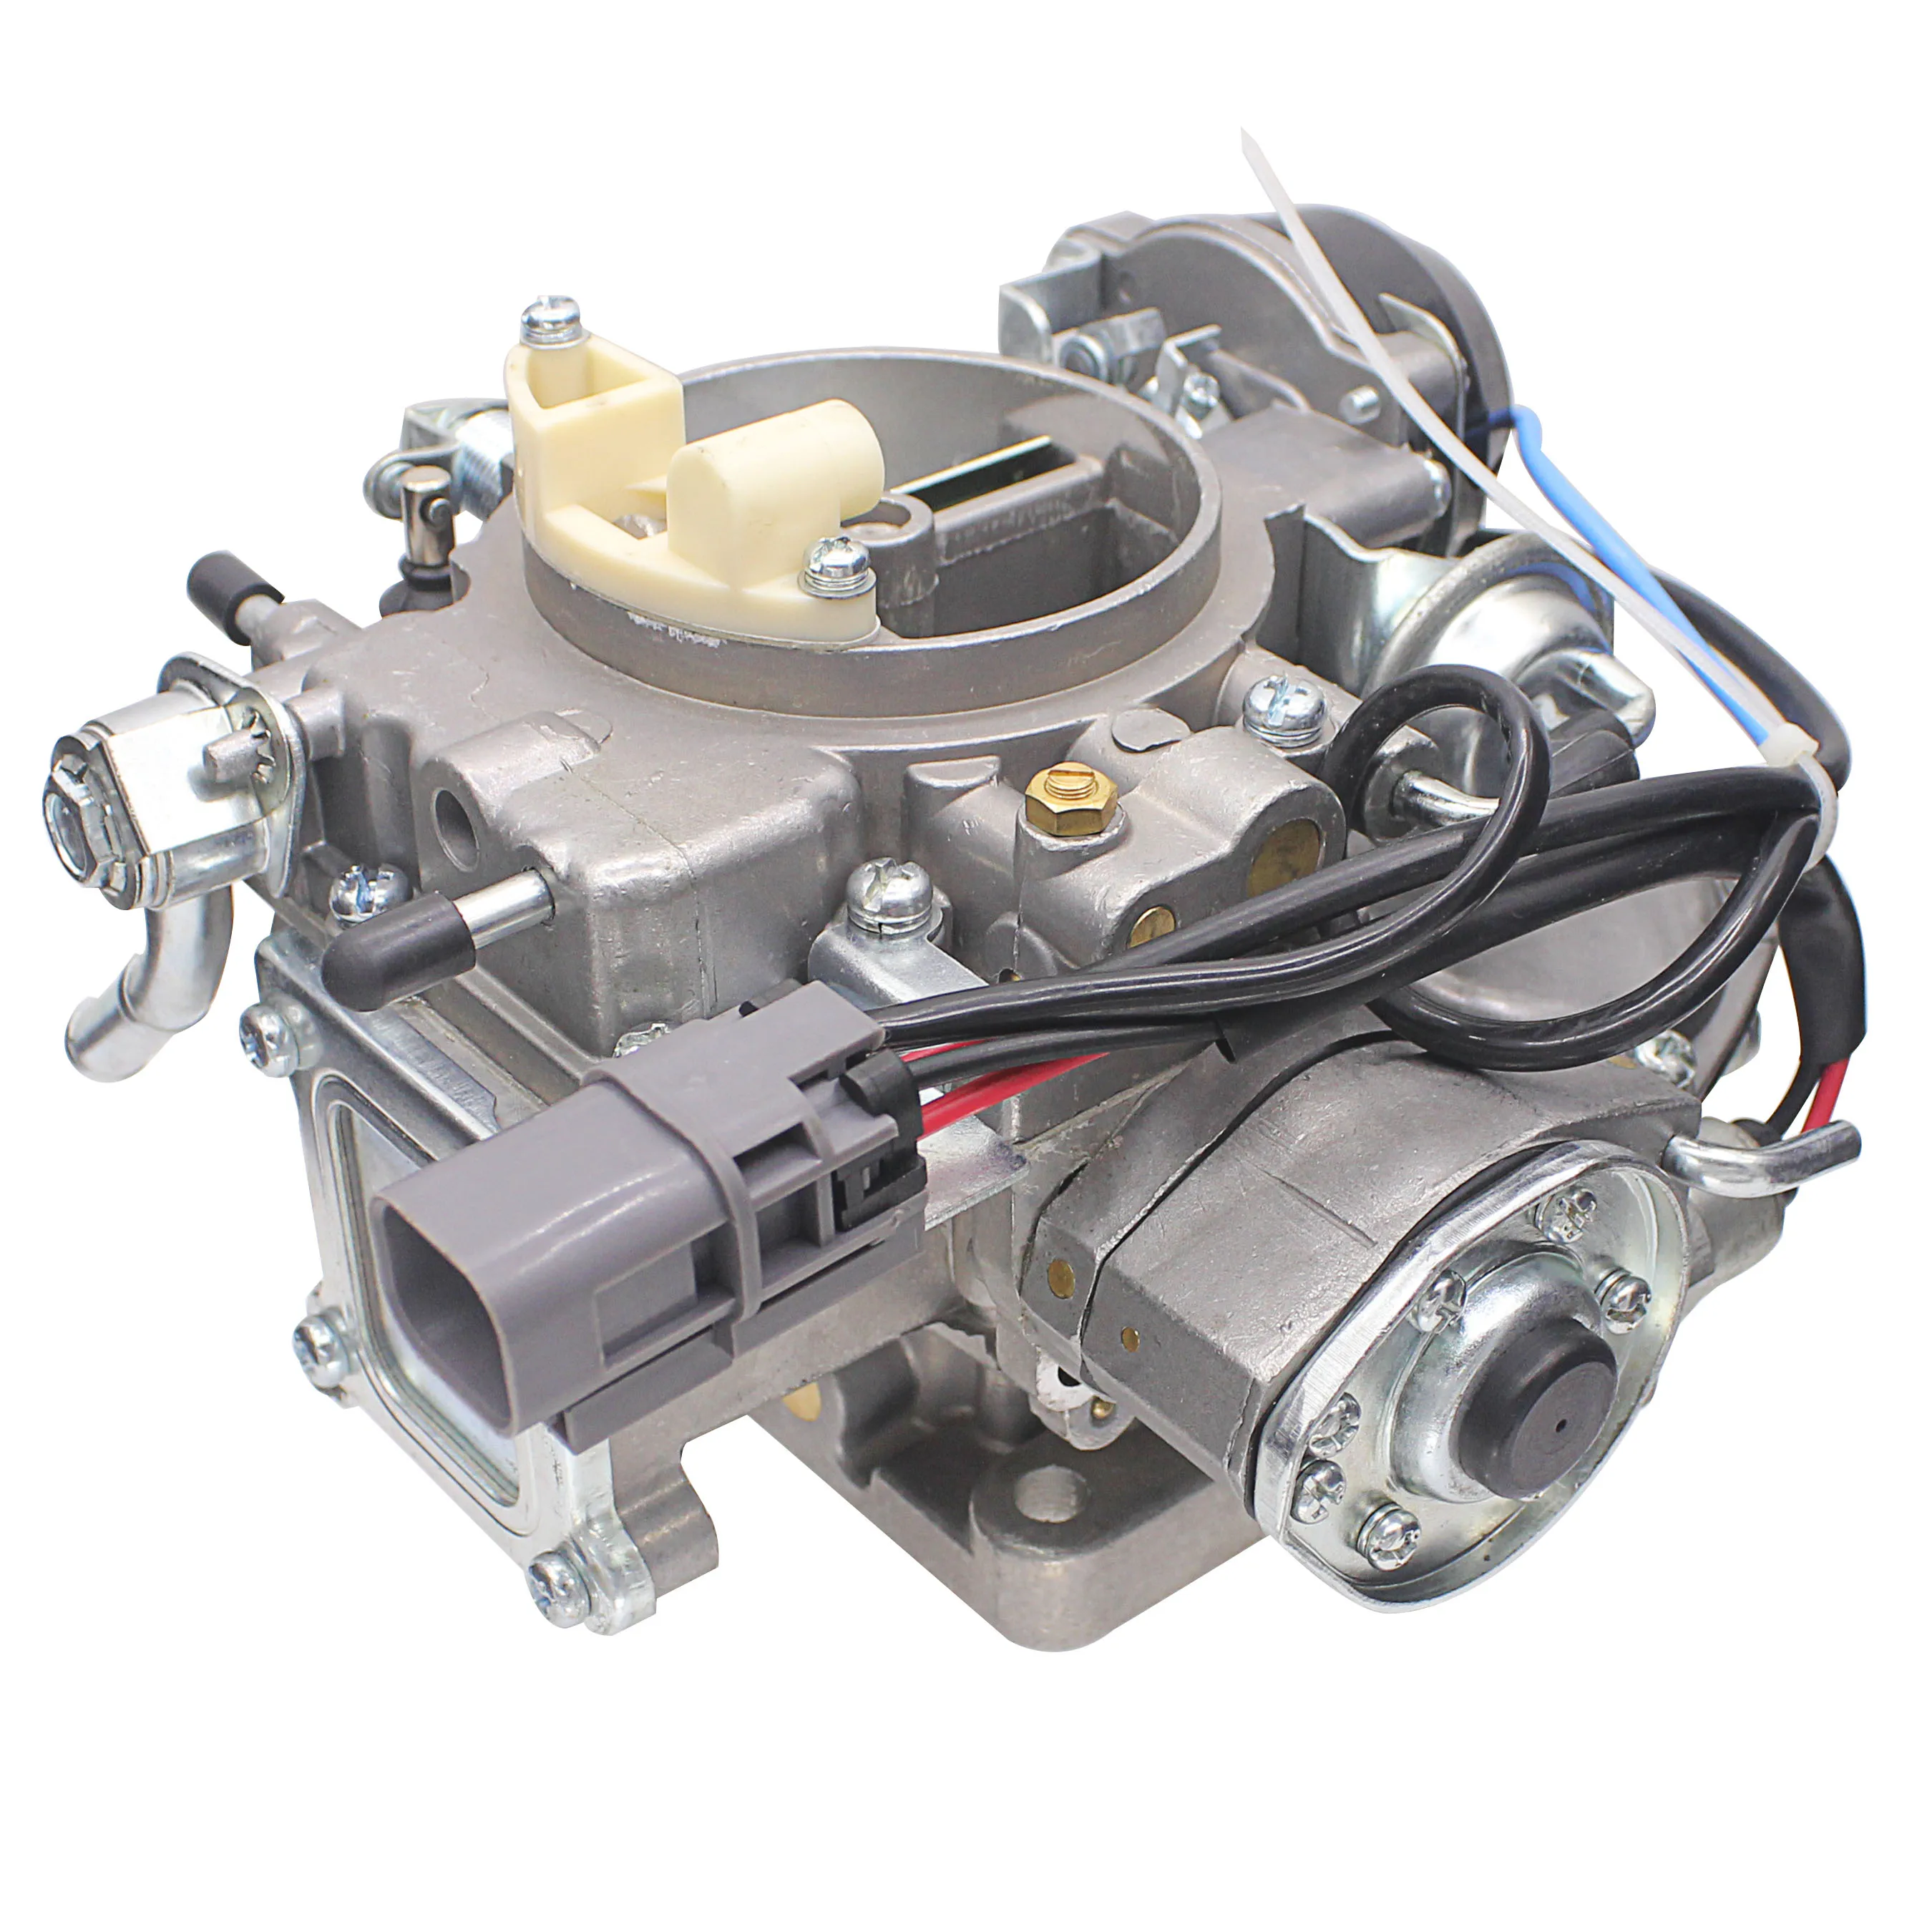 

H255 hight quality aluminum carburetor FORNISSAN PATROL GQ Y60 TB42S 4.2L 16010-26J00 RB30 3.0L